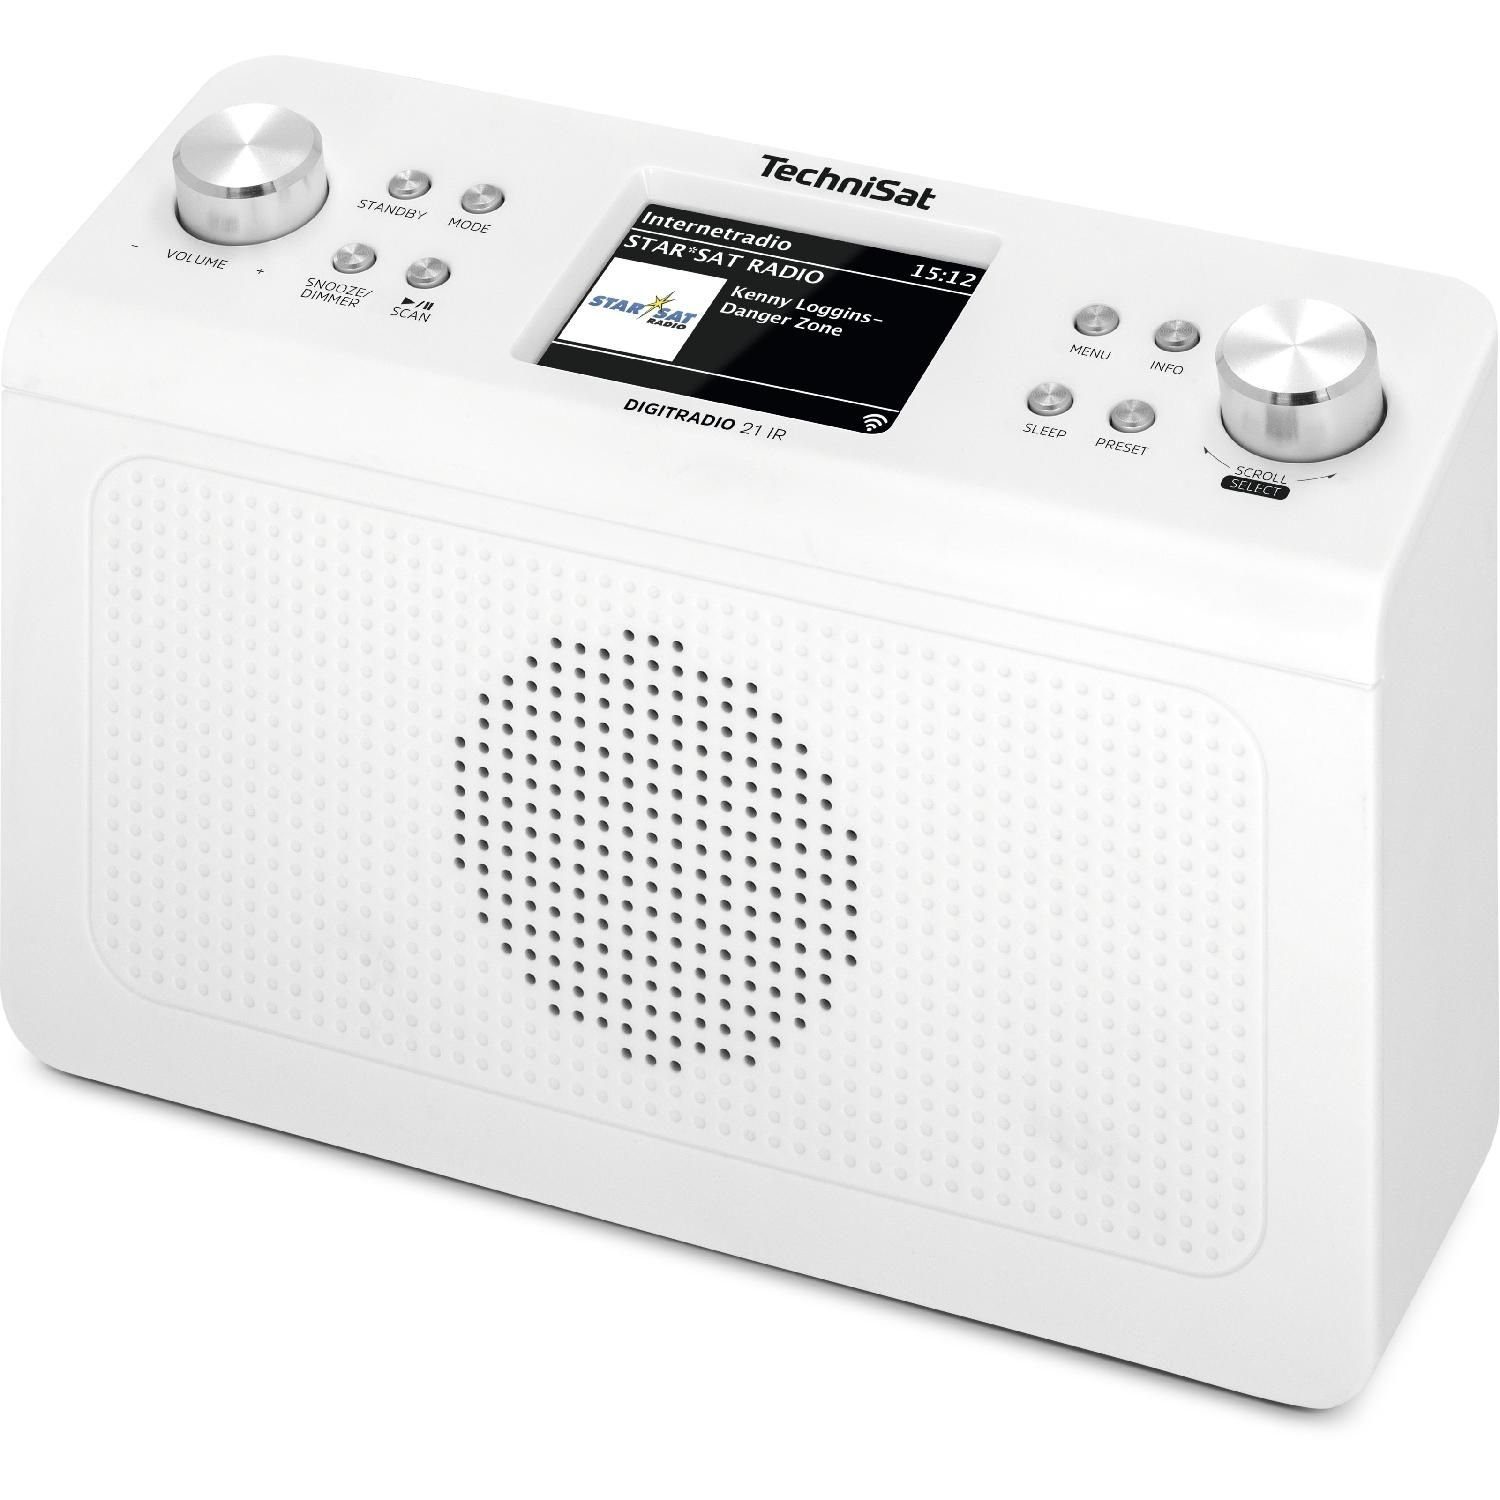 DIGITRADIO TFT-Farbdisplay Digitalradio, 2,8" TechniSat UKW-Radio, Digitalradio DAB+ weiß (DAB) Bluetooth (Bluetooth, 21 IR TFT) DAB+ Digitalradio